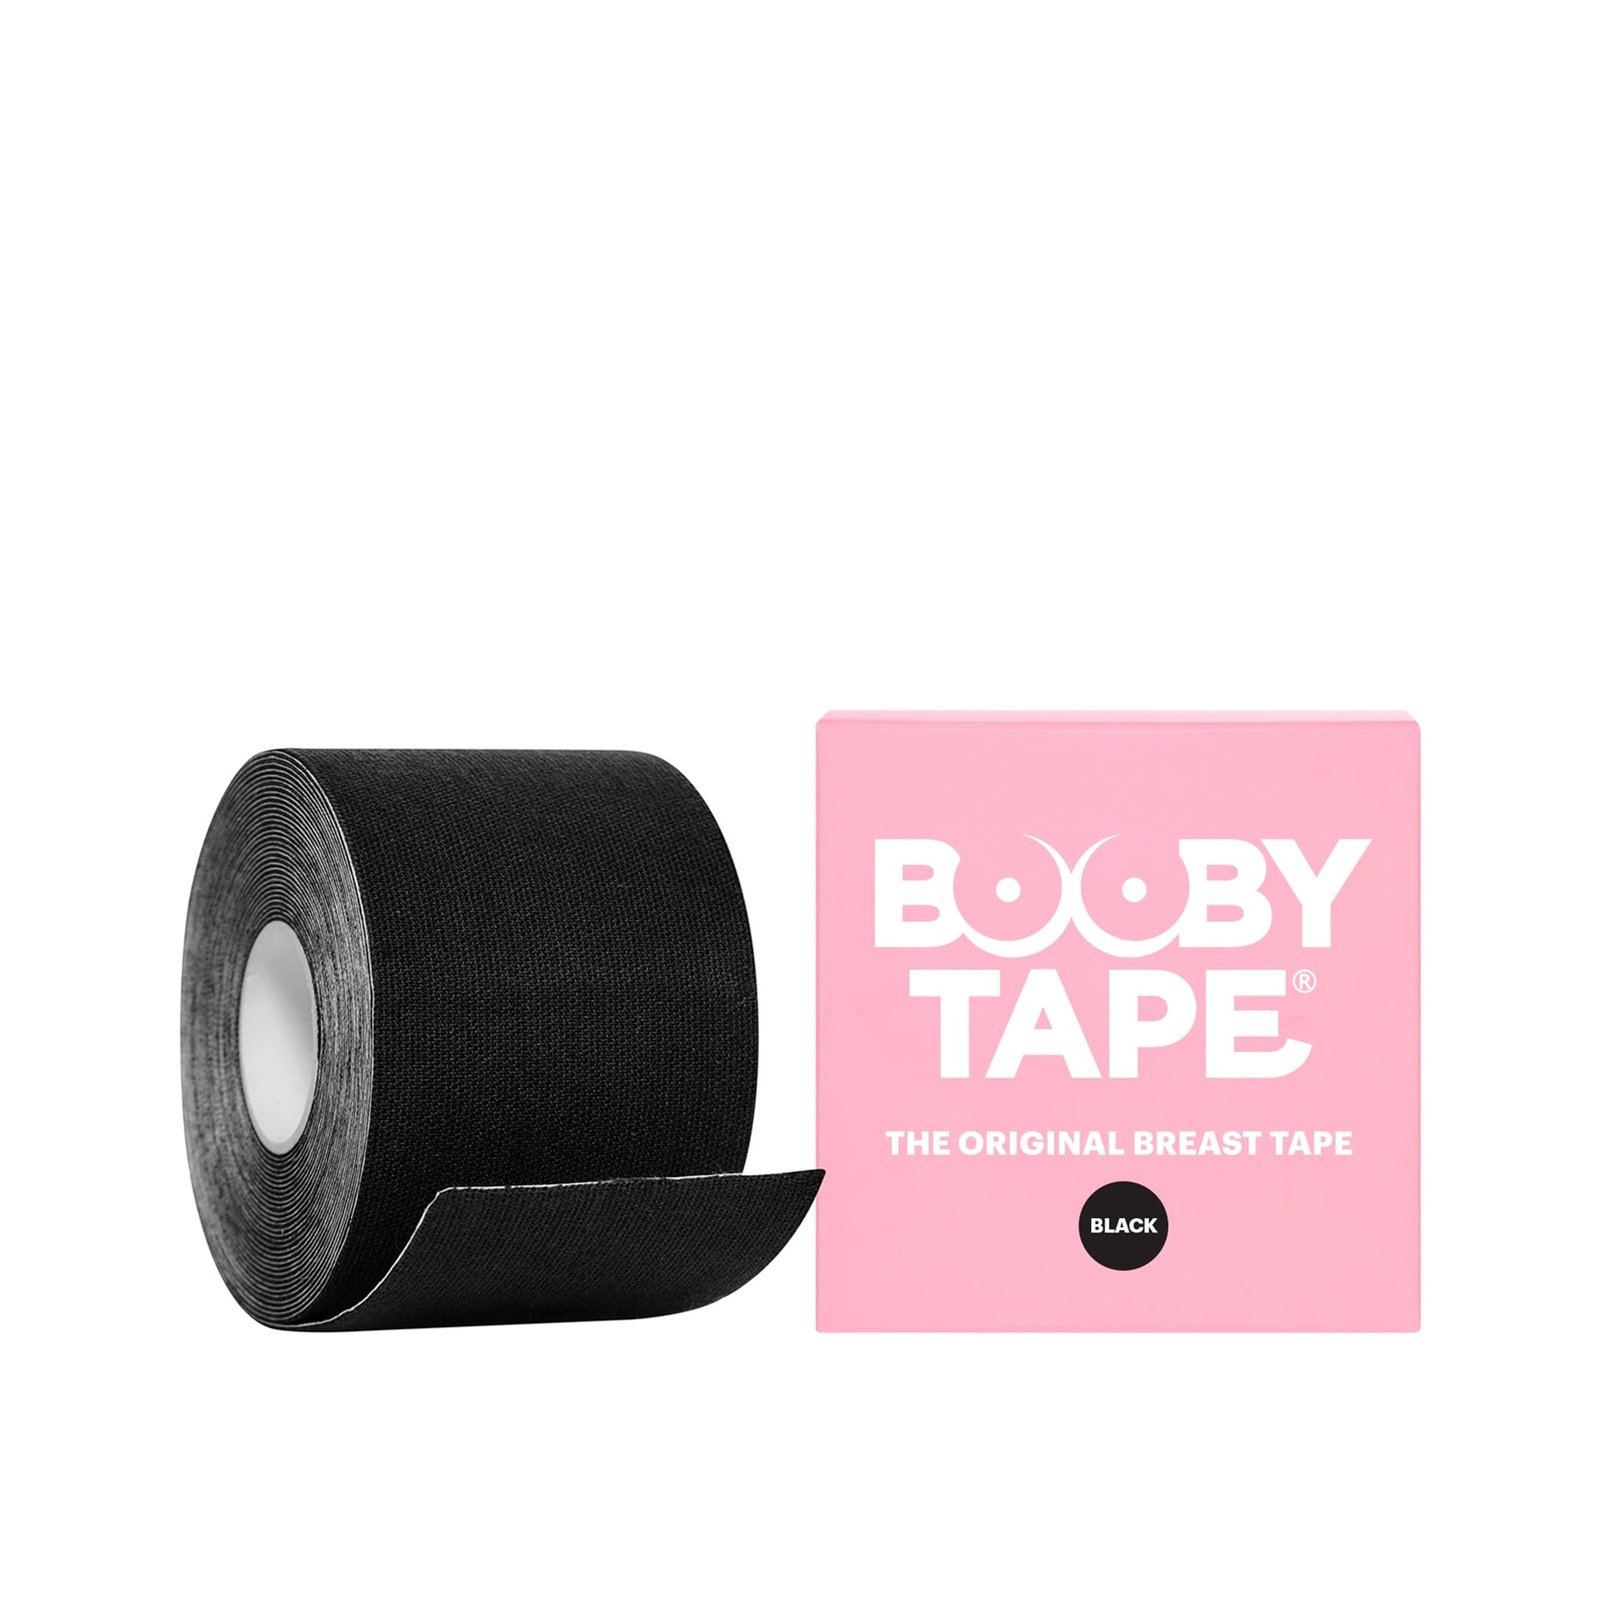 Booby Tape The Original Breast Tape Black 5m (5.46 yd)